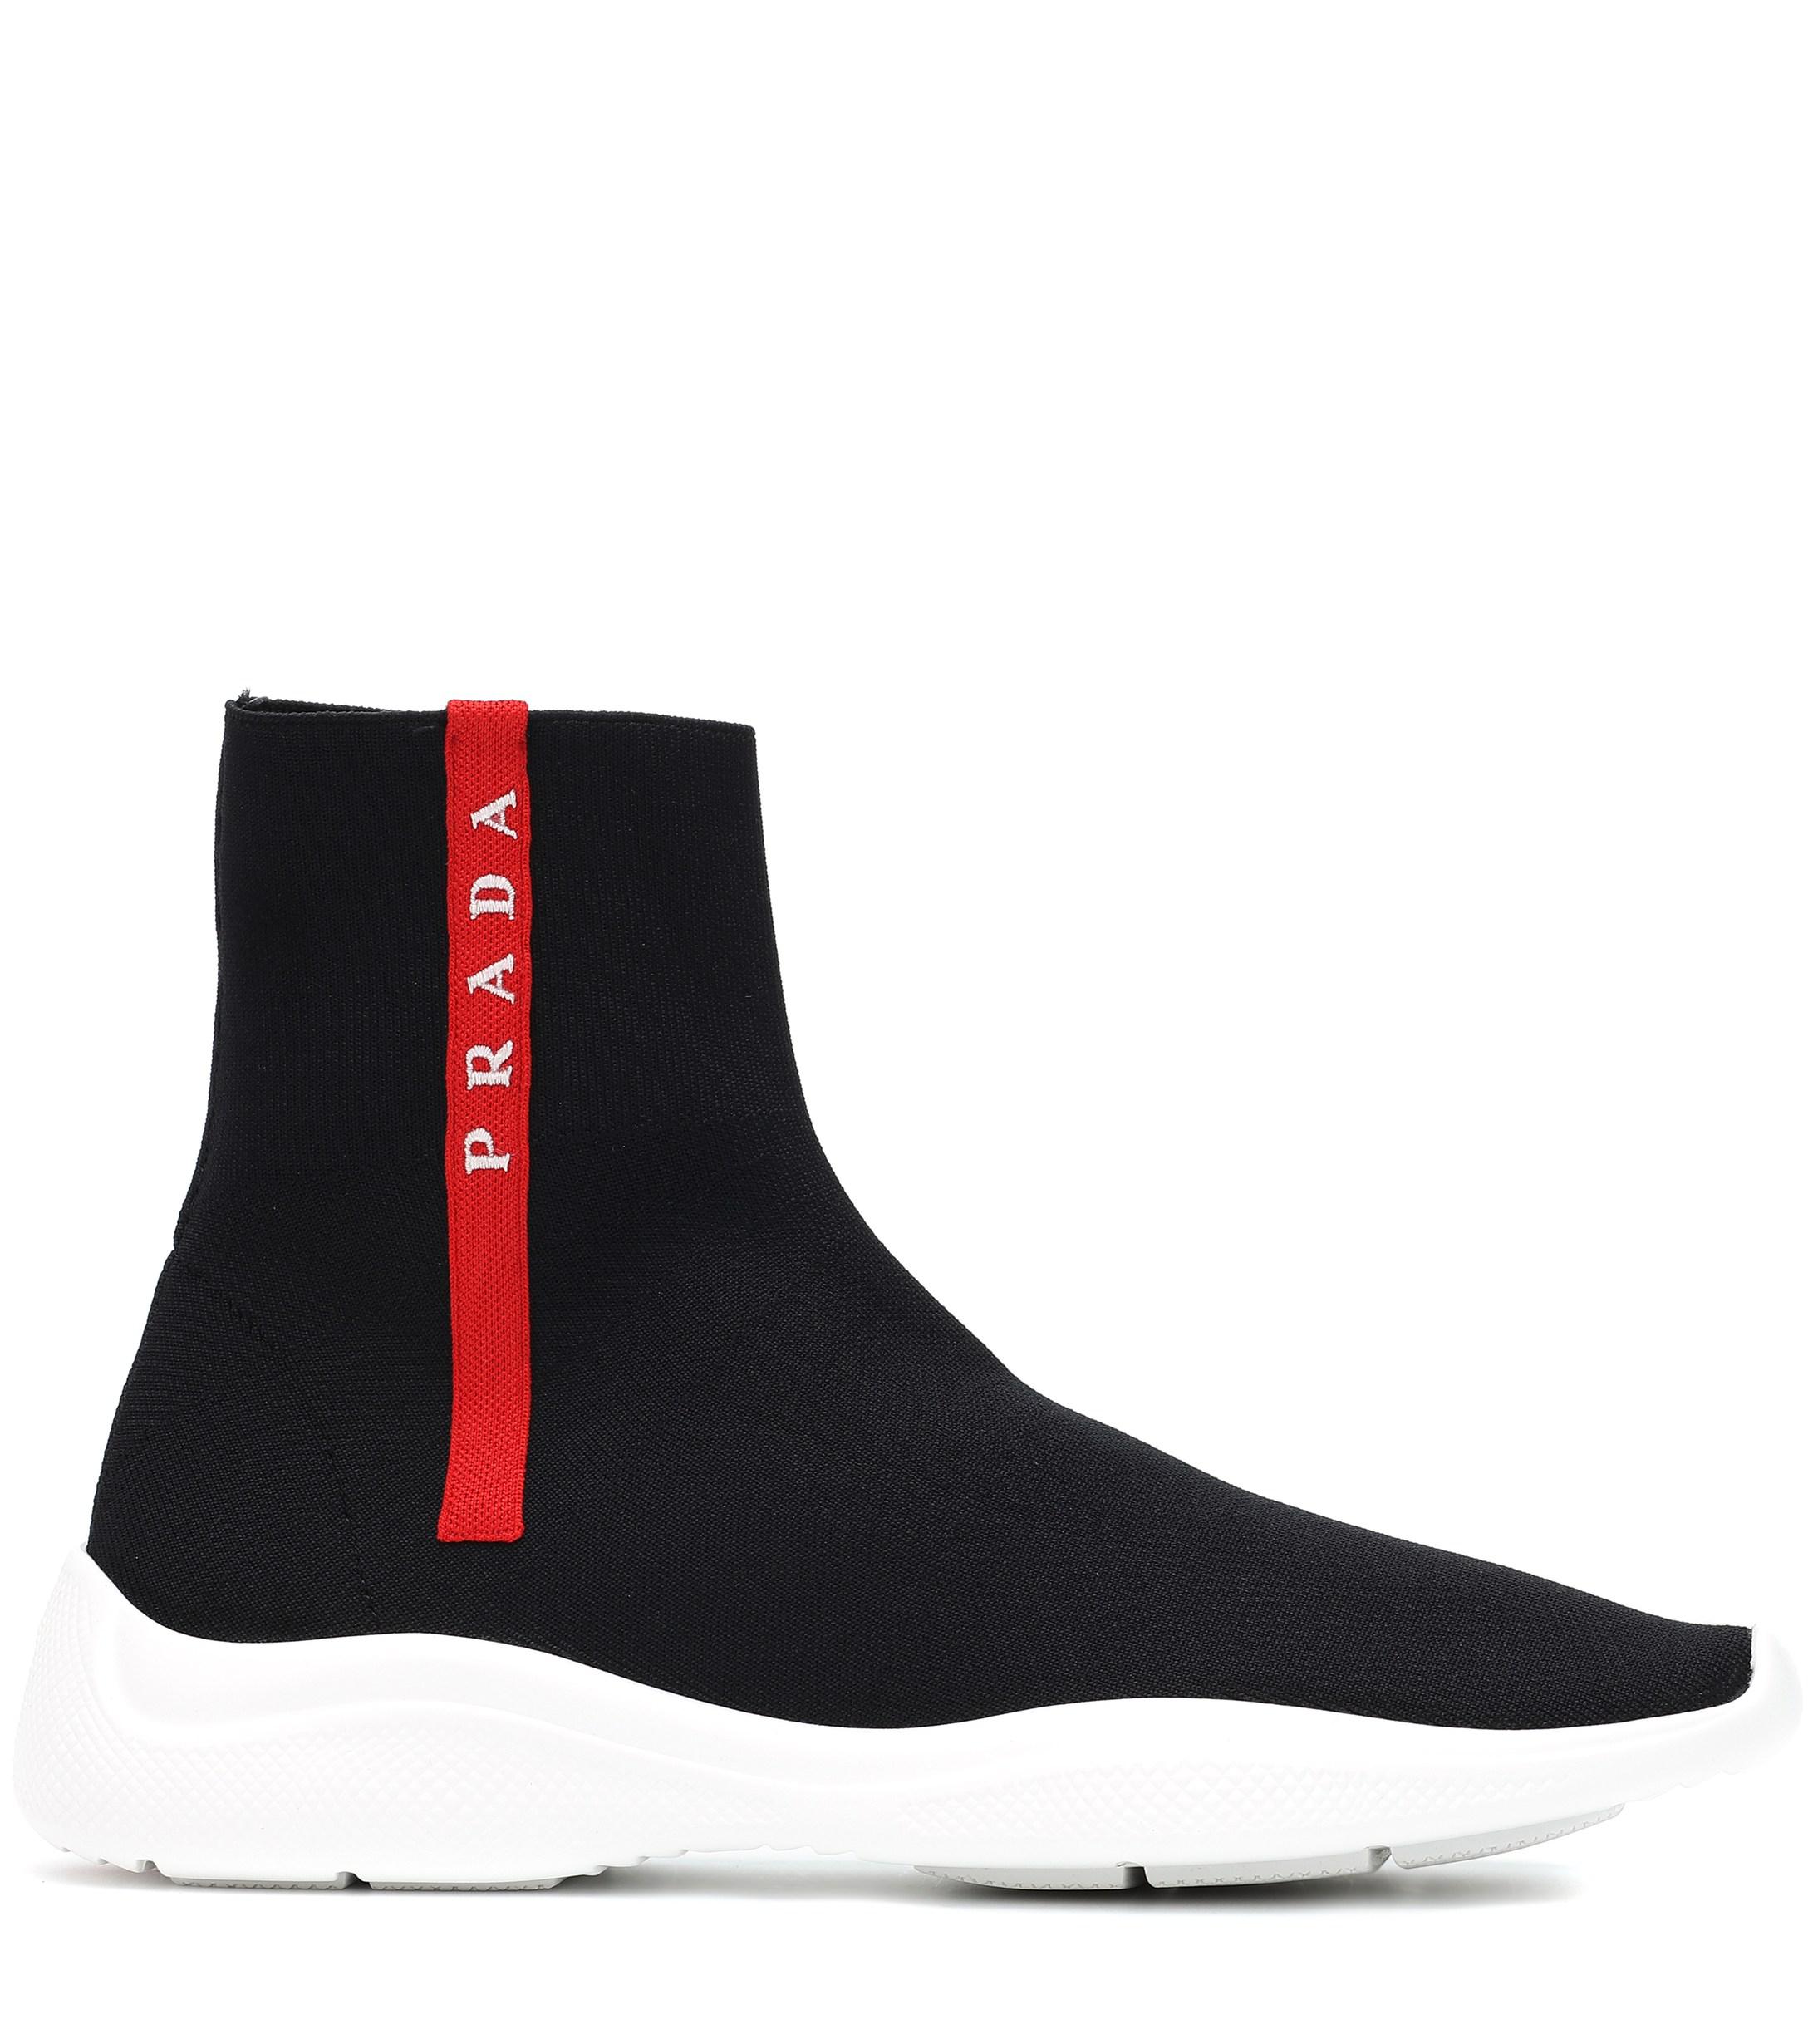 Prada High-top Sock Sneakers in Black - Save 31% - Lyst